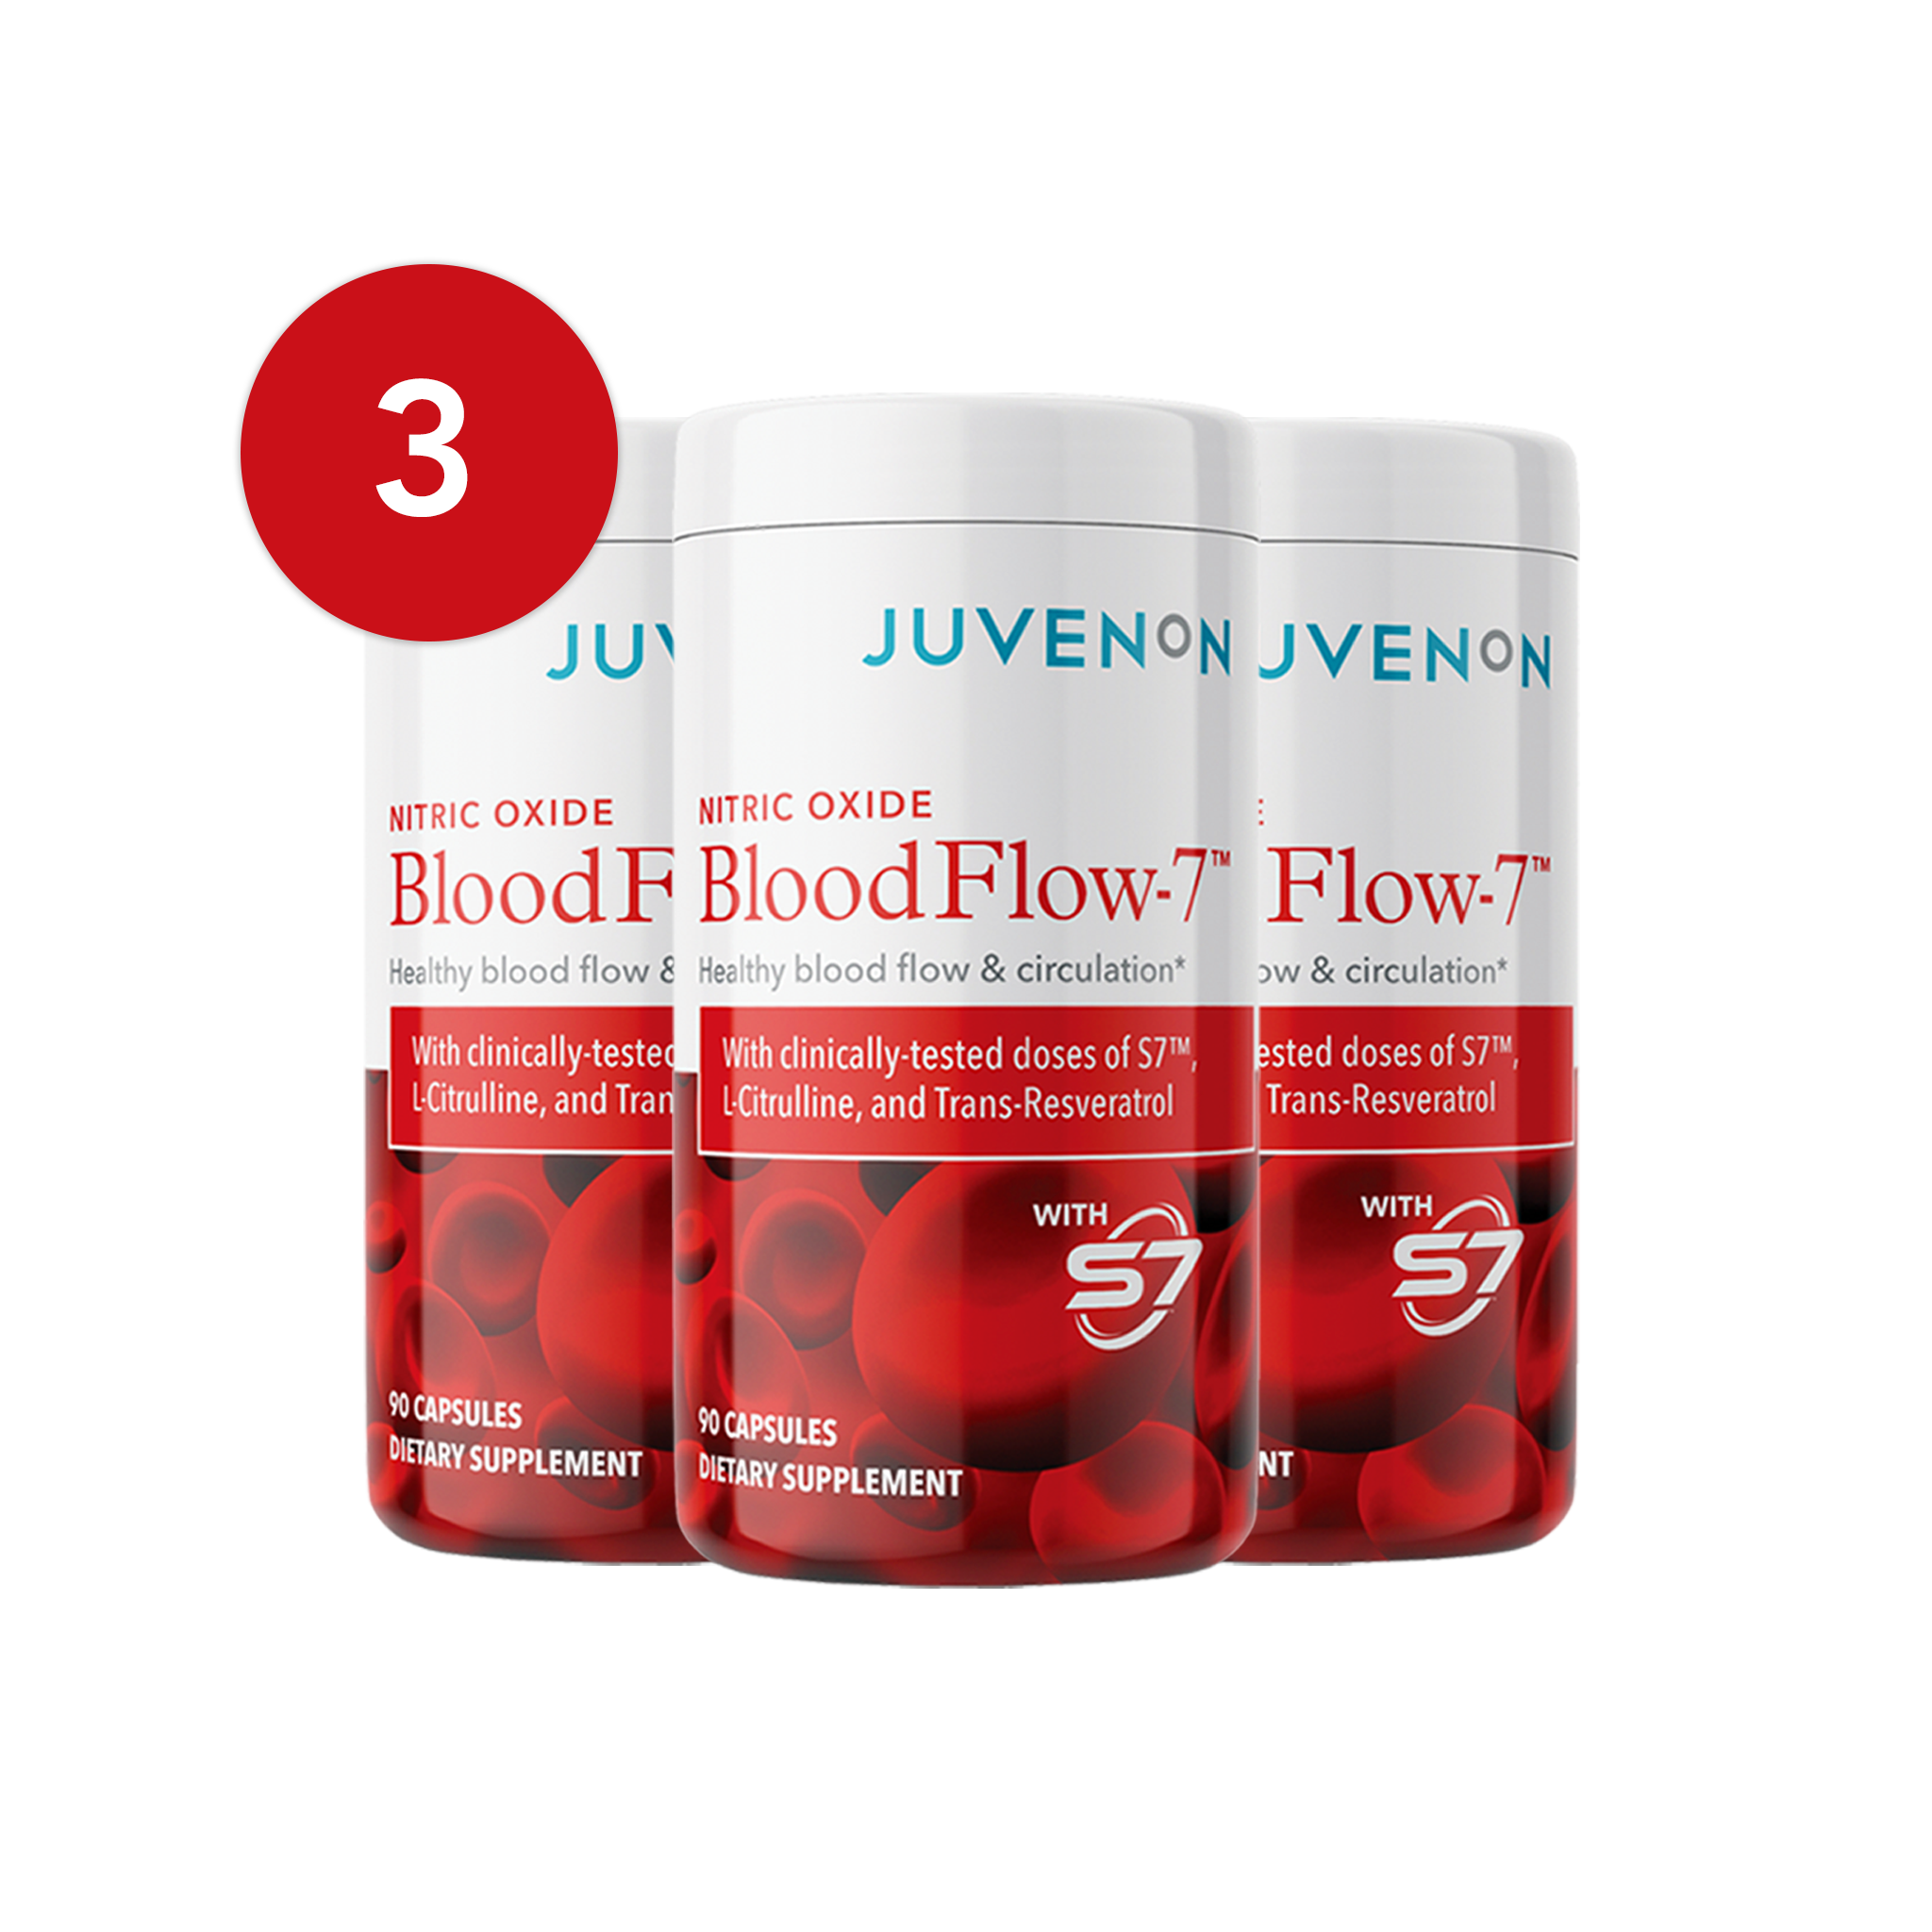 BloodFlow-7? Nerve and Leg Pain